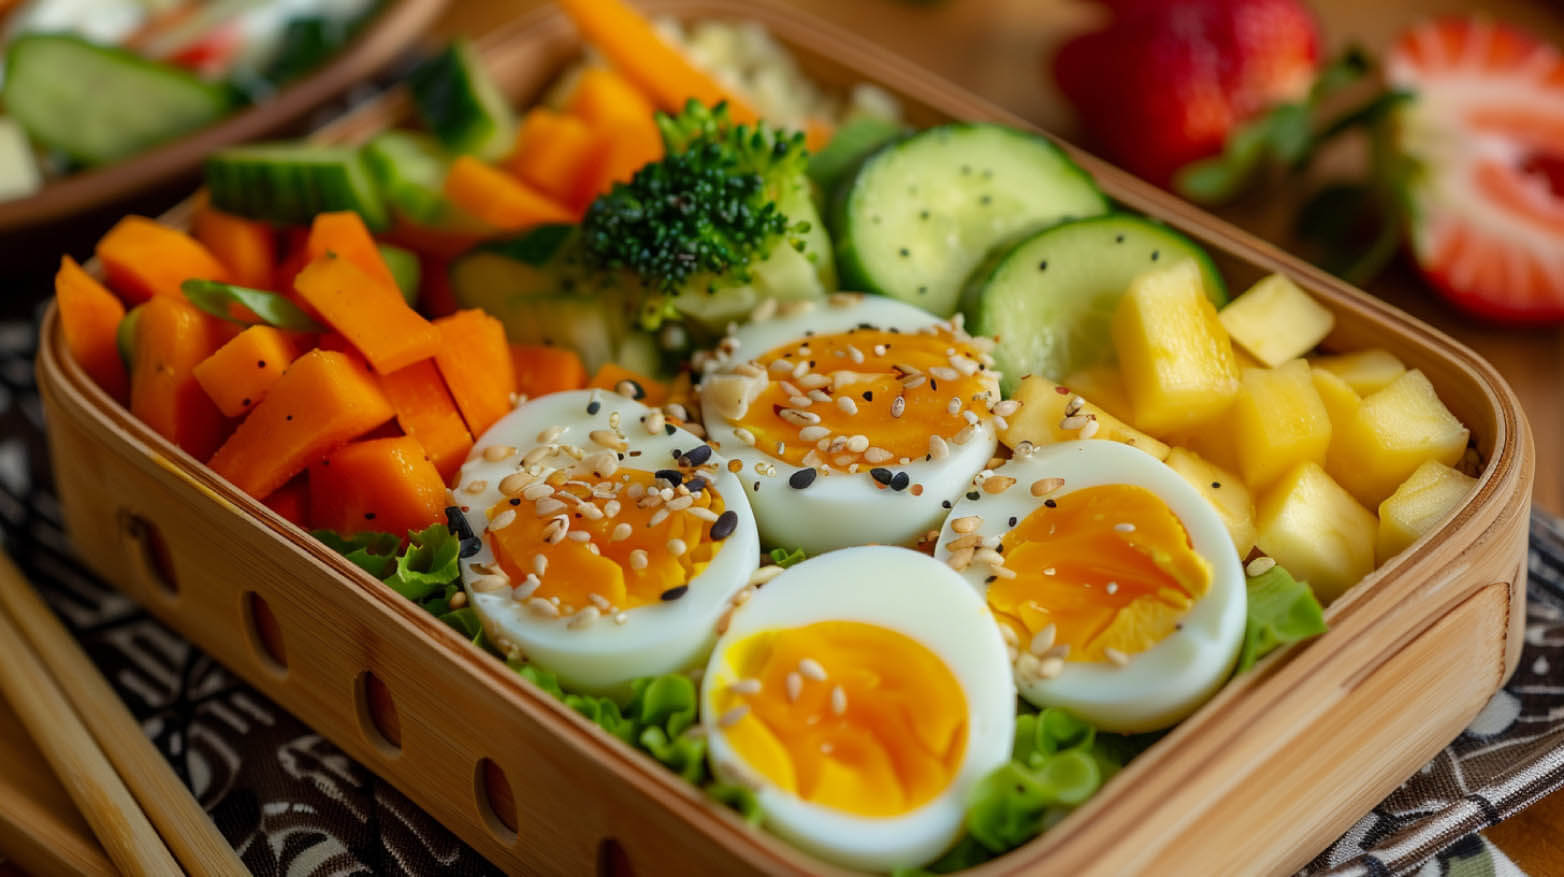 boiled egg, vegetable and fruit box 